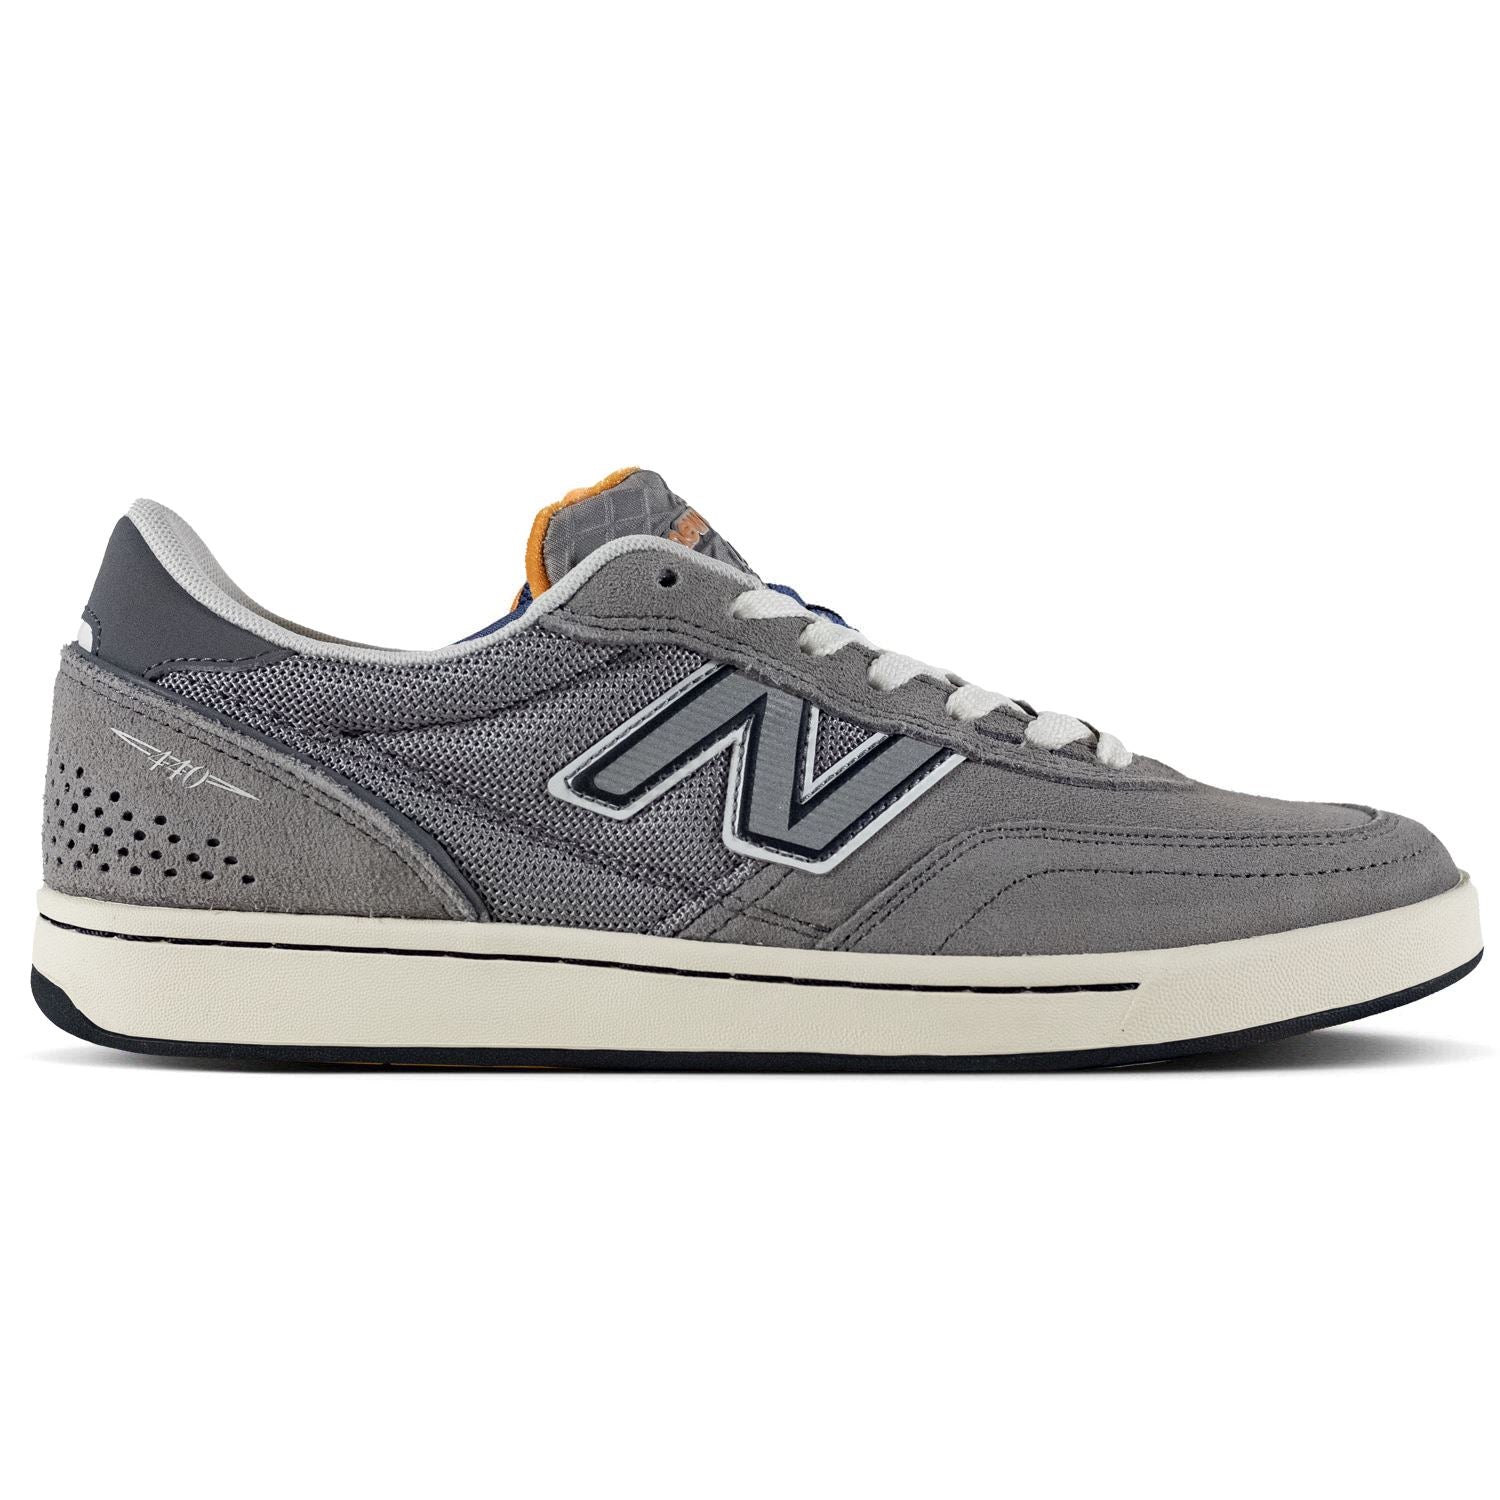 New Balance Numeric NM440 V2 x Vu Grey/Safety Orange footwear New Balance Numeric 